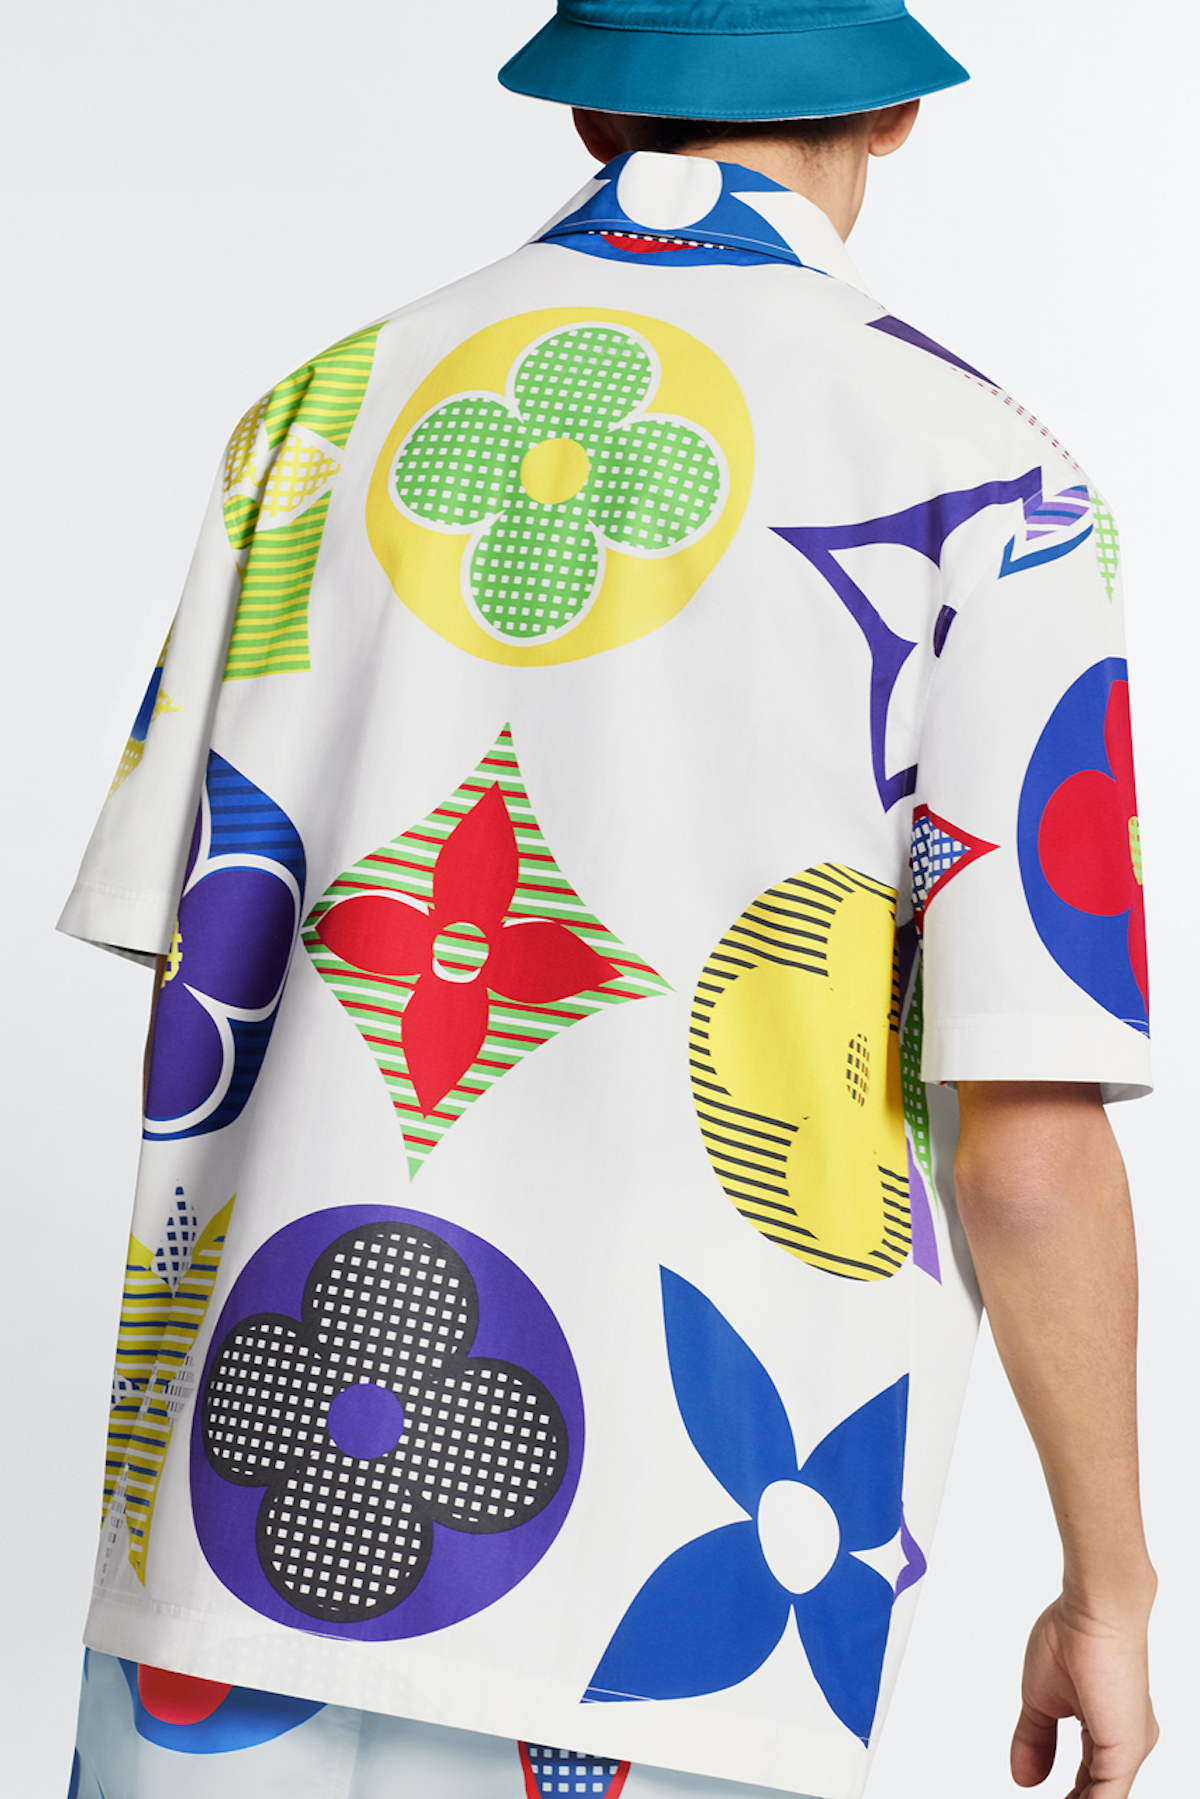 Louis Vuitton 2020 Multicolor Monogram Hawaiian Shirt - White